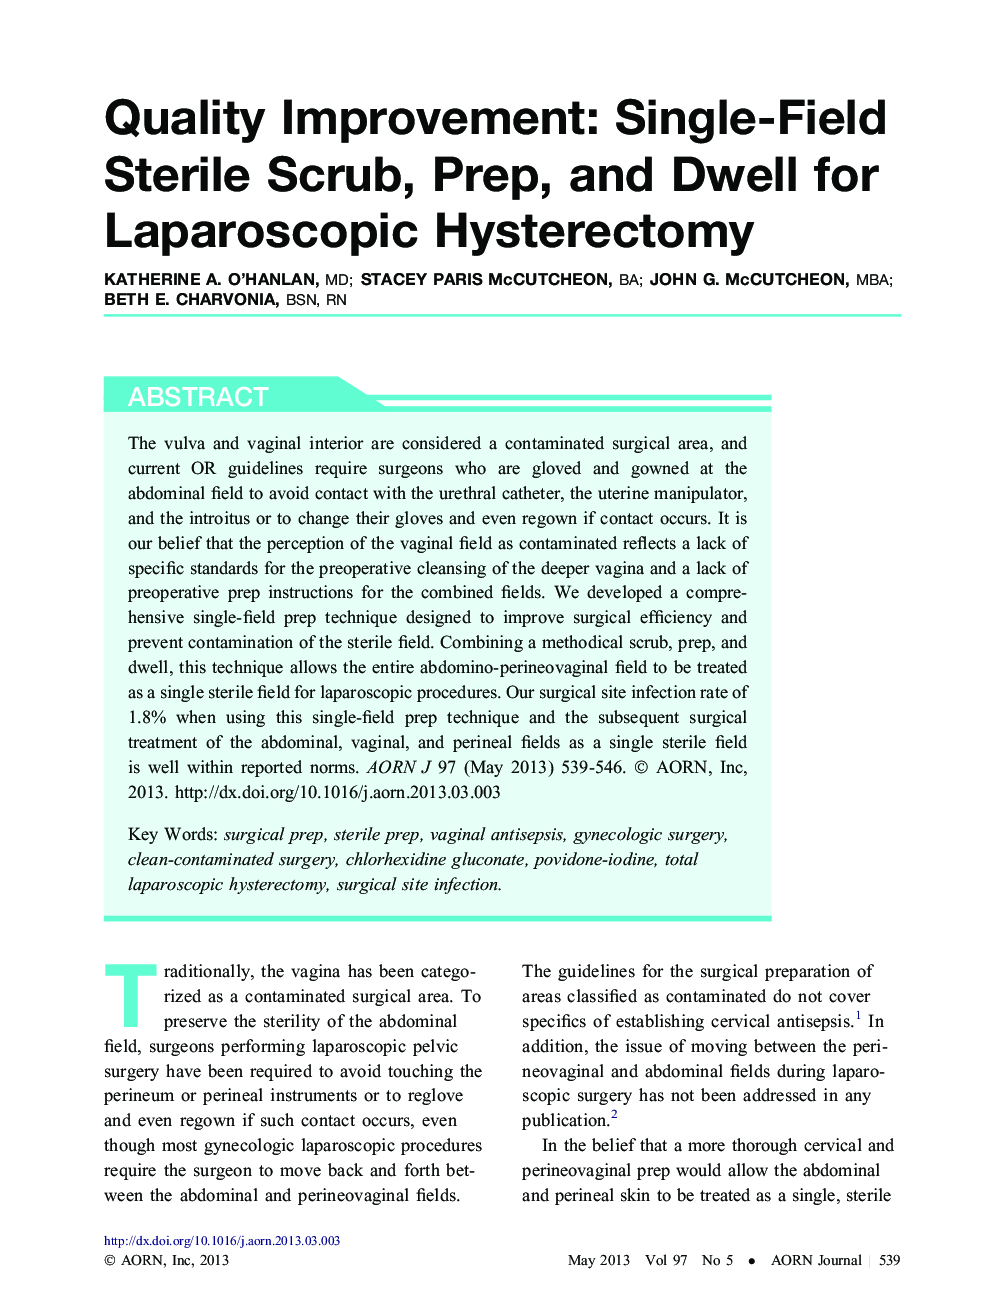 Quality Improvement: Single-Field Sterile Scrub, Prep, and Dwell for Laparoscopic Hysterectomy